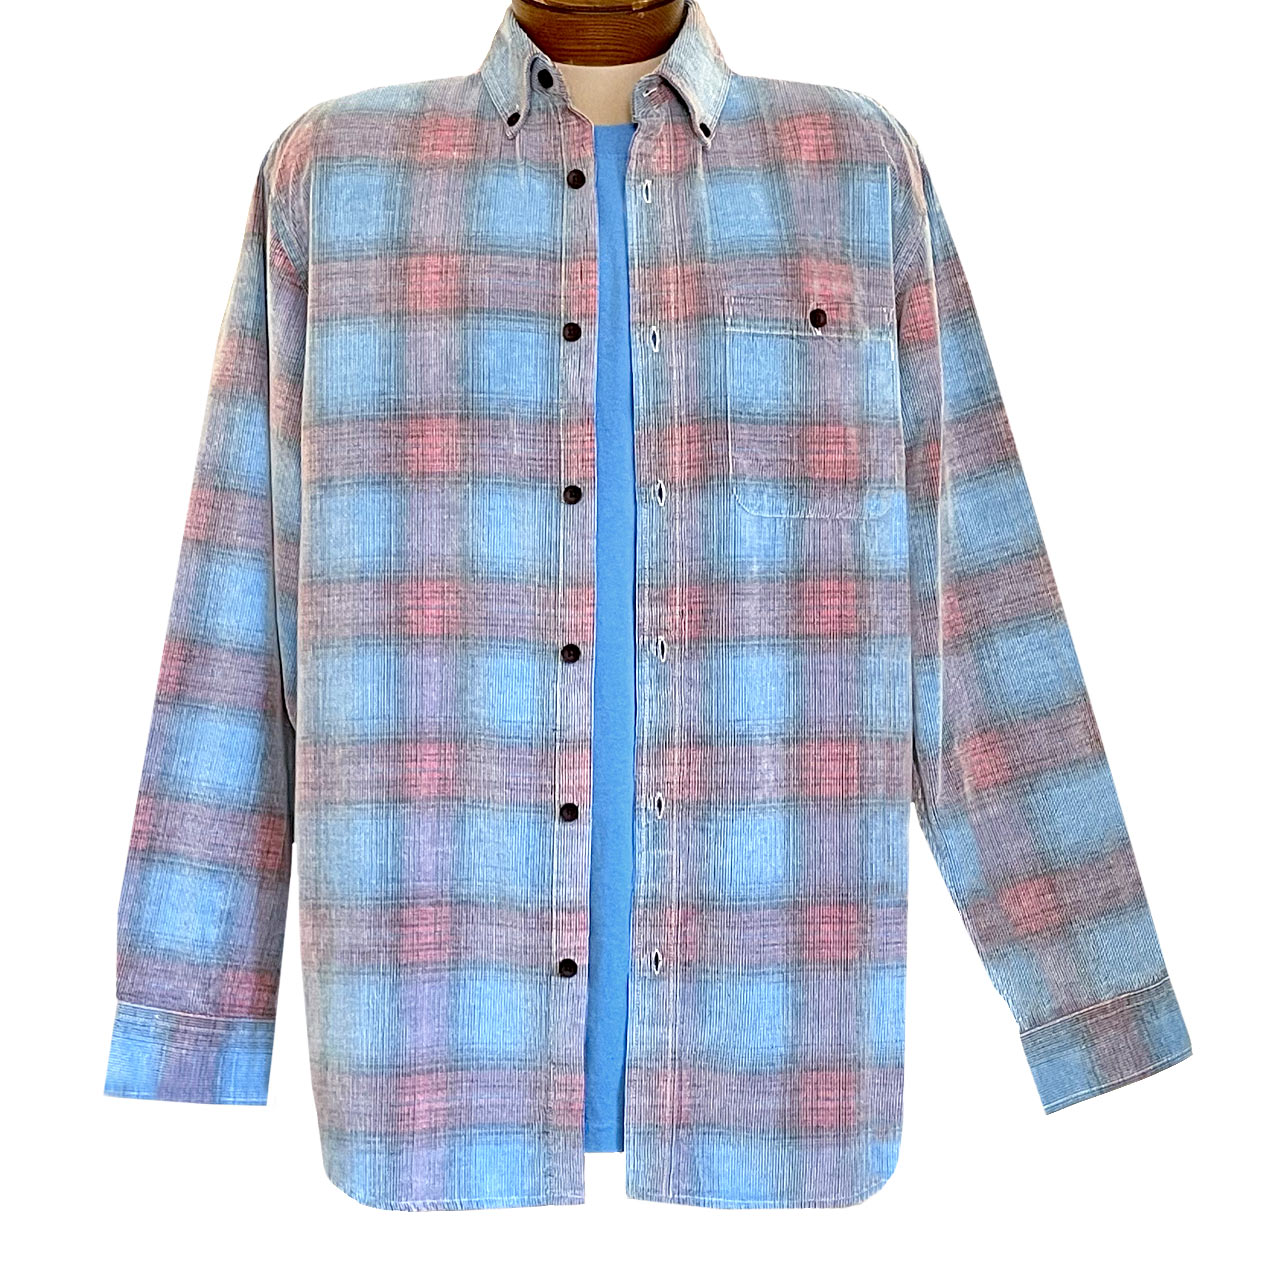 Men's R. Options Corduroy Long Sleeve Yarn Dyed Plaid Sport Shirt, #81043-28A Royal Blue/Red